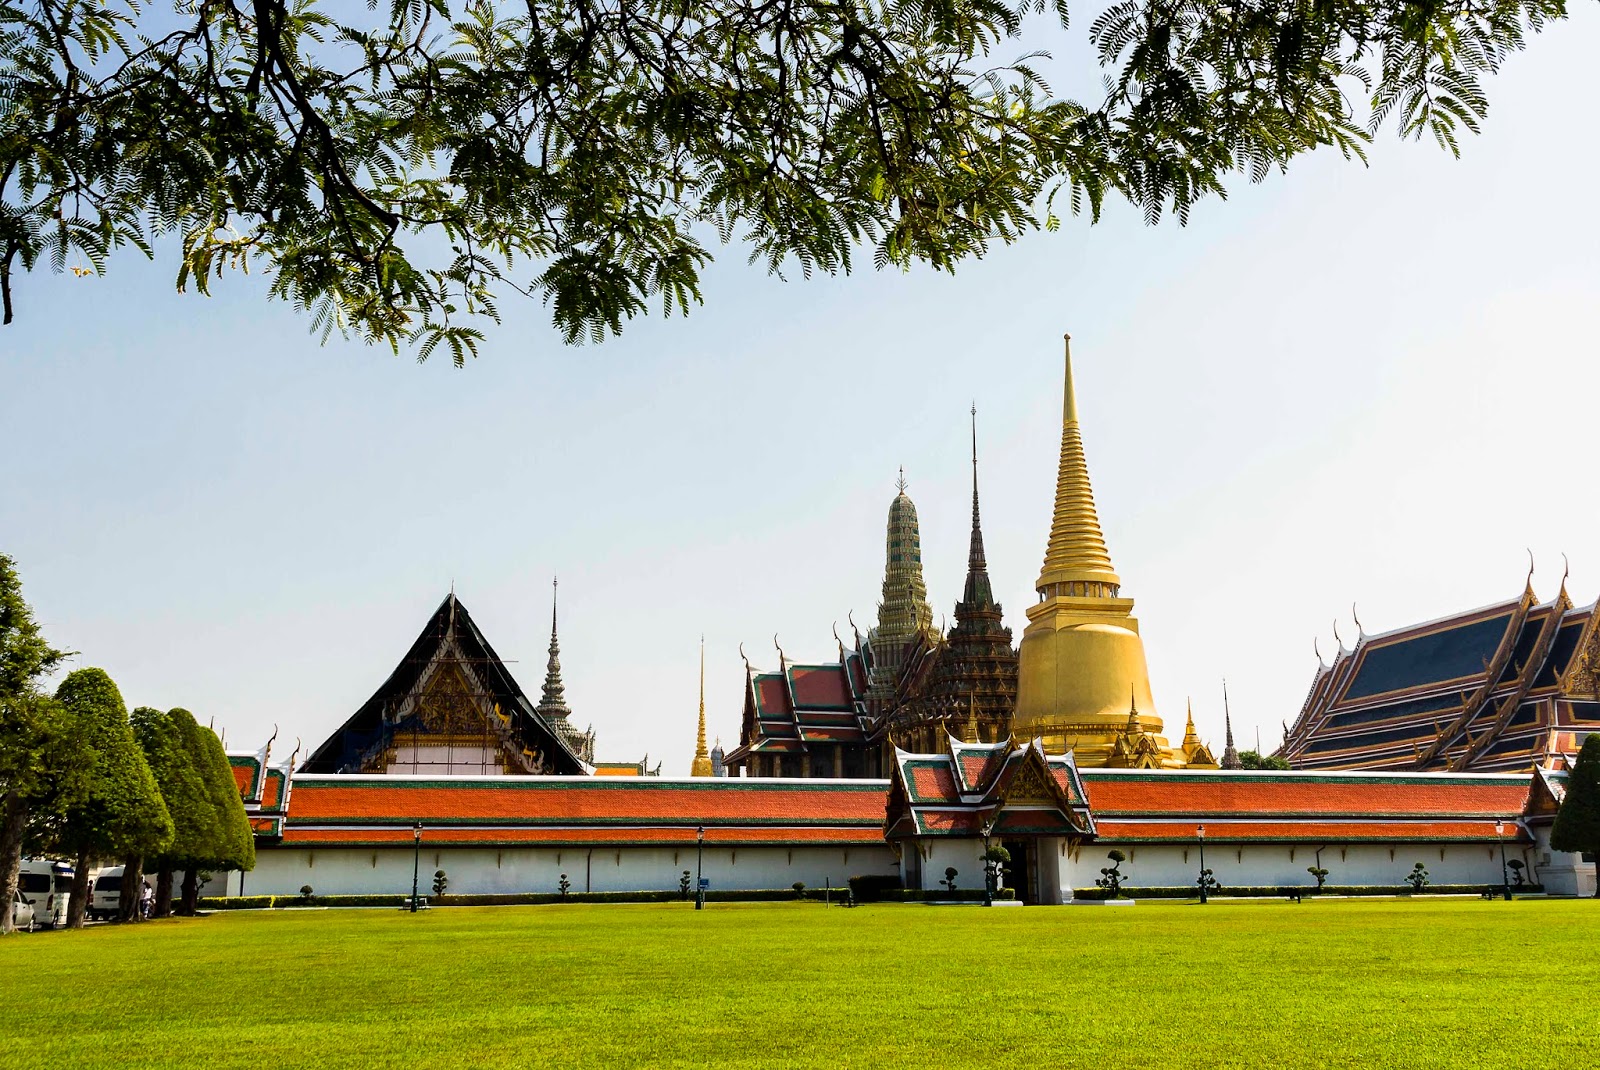 http://www.dreamstime.com/stock-photo-grand-palace-bangkok-emerald-buddha-temple-thailand-image48552330